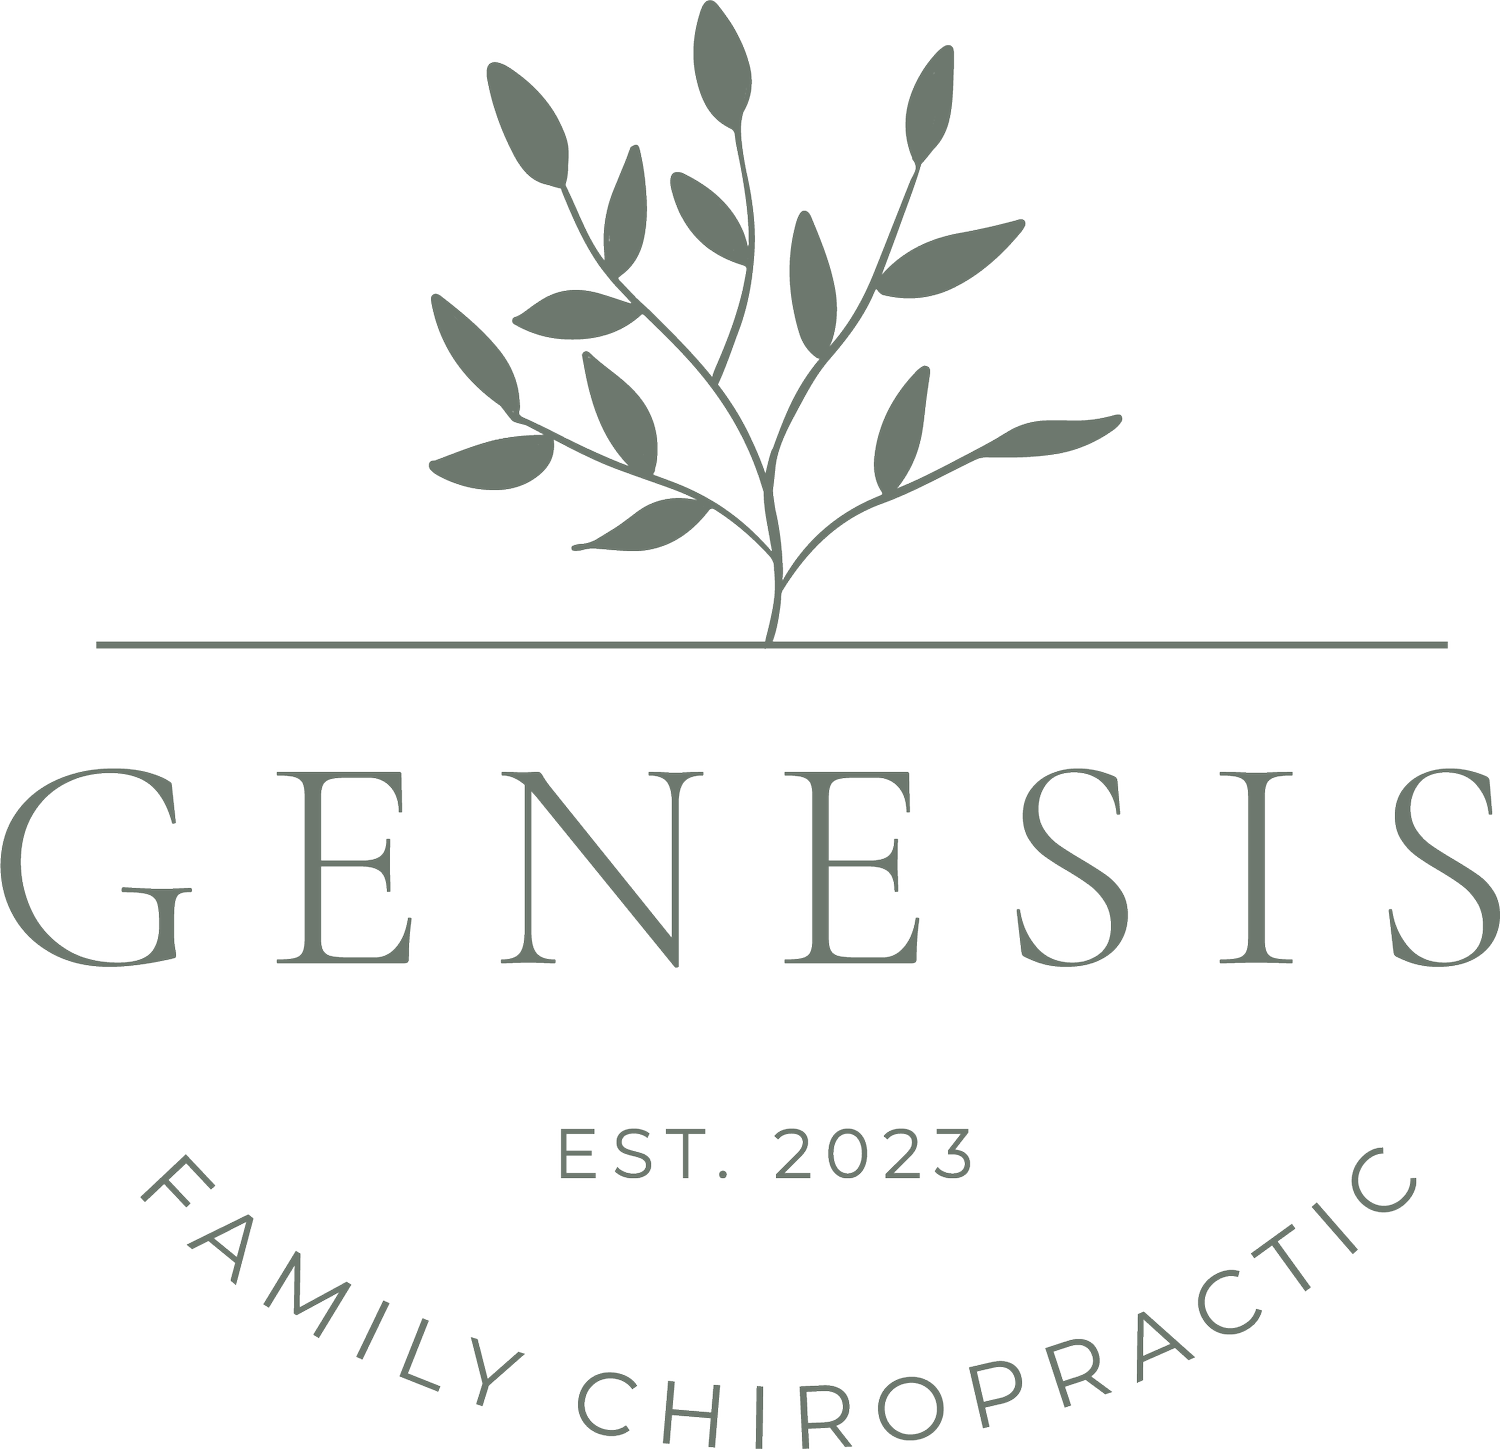 Genesis Family Chiropractic